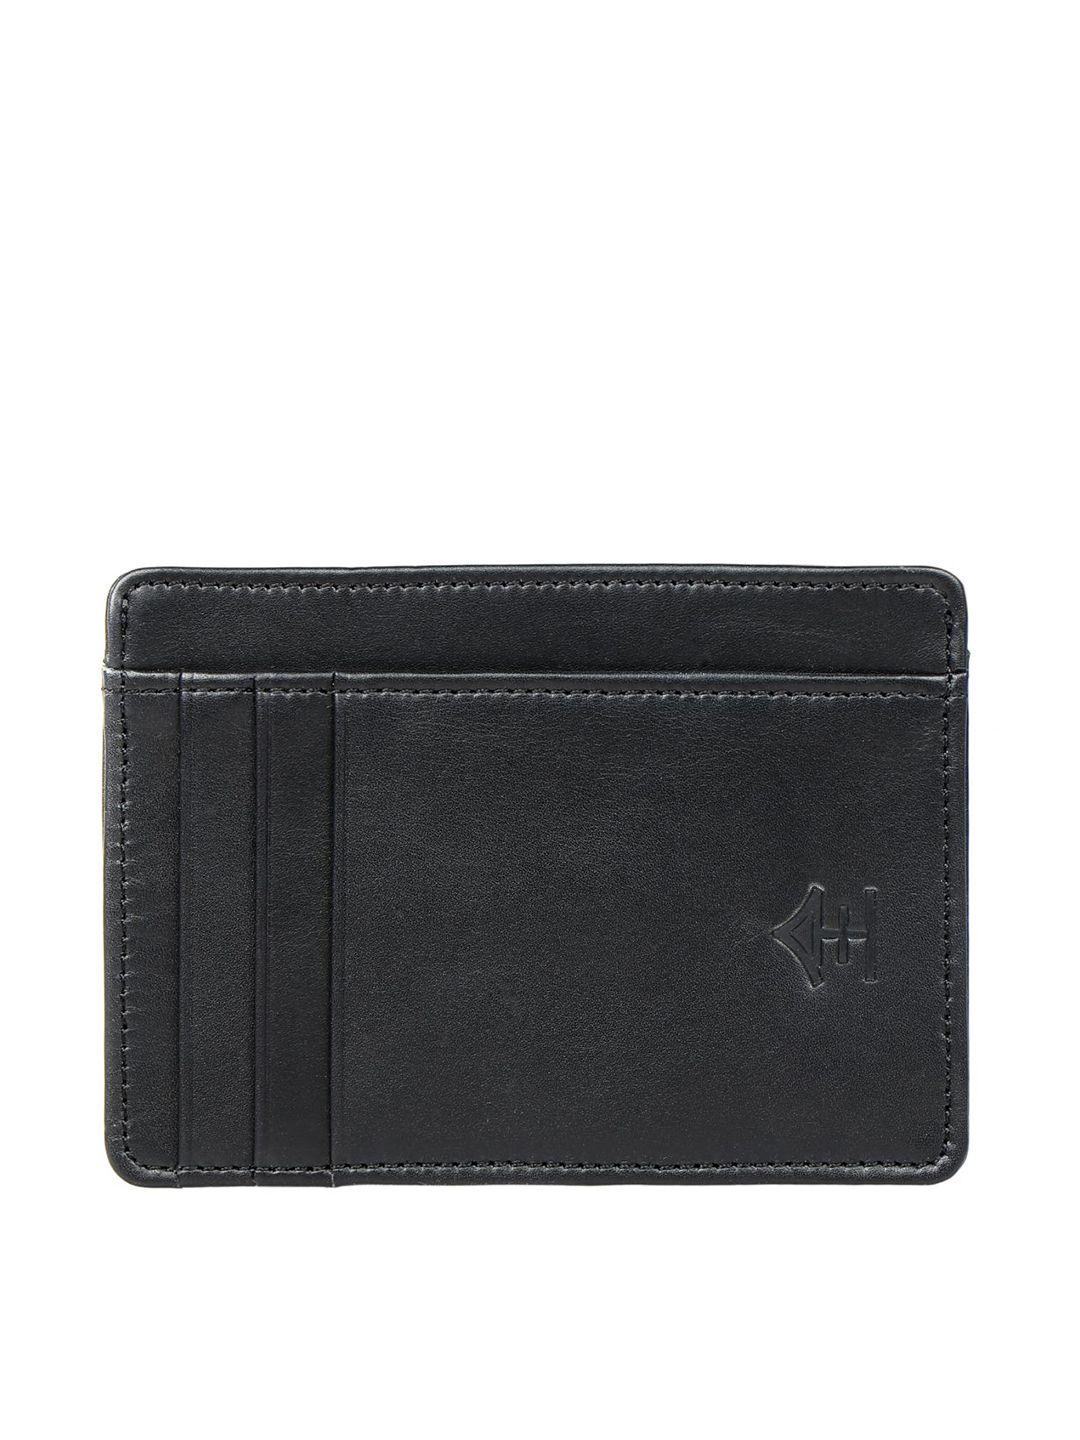 hidesign women black leather card holder